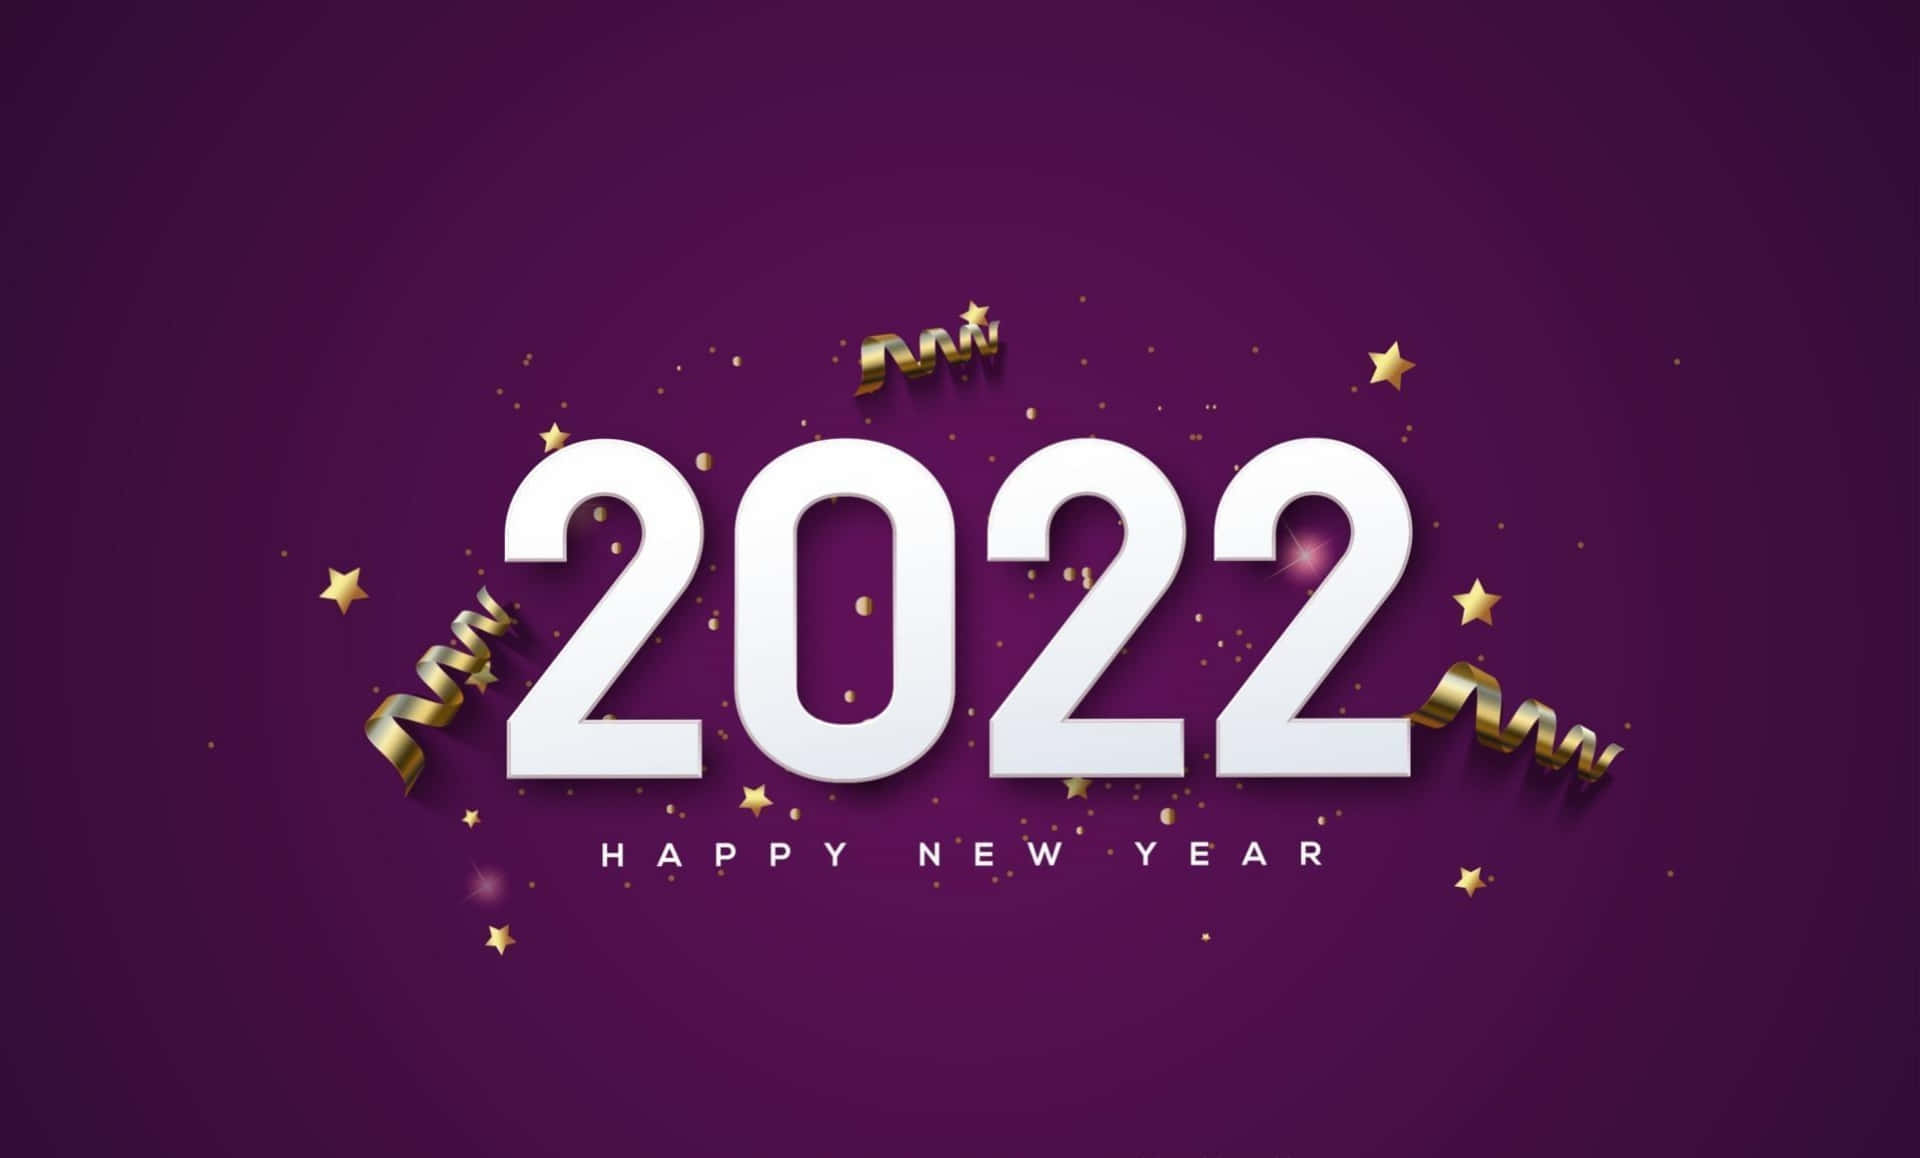 Ønskerdig Et Lykkeligt Og Glædefyldt Nytår 2022!